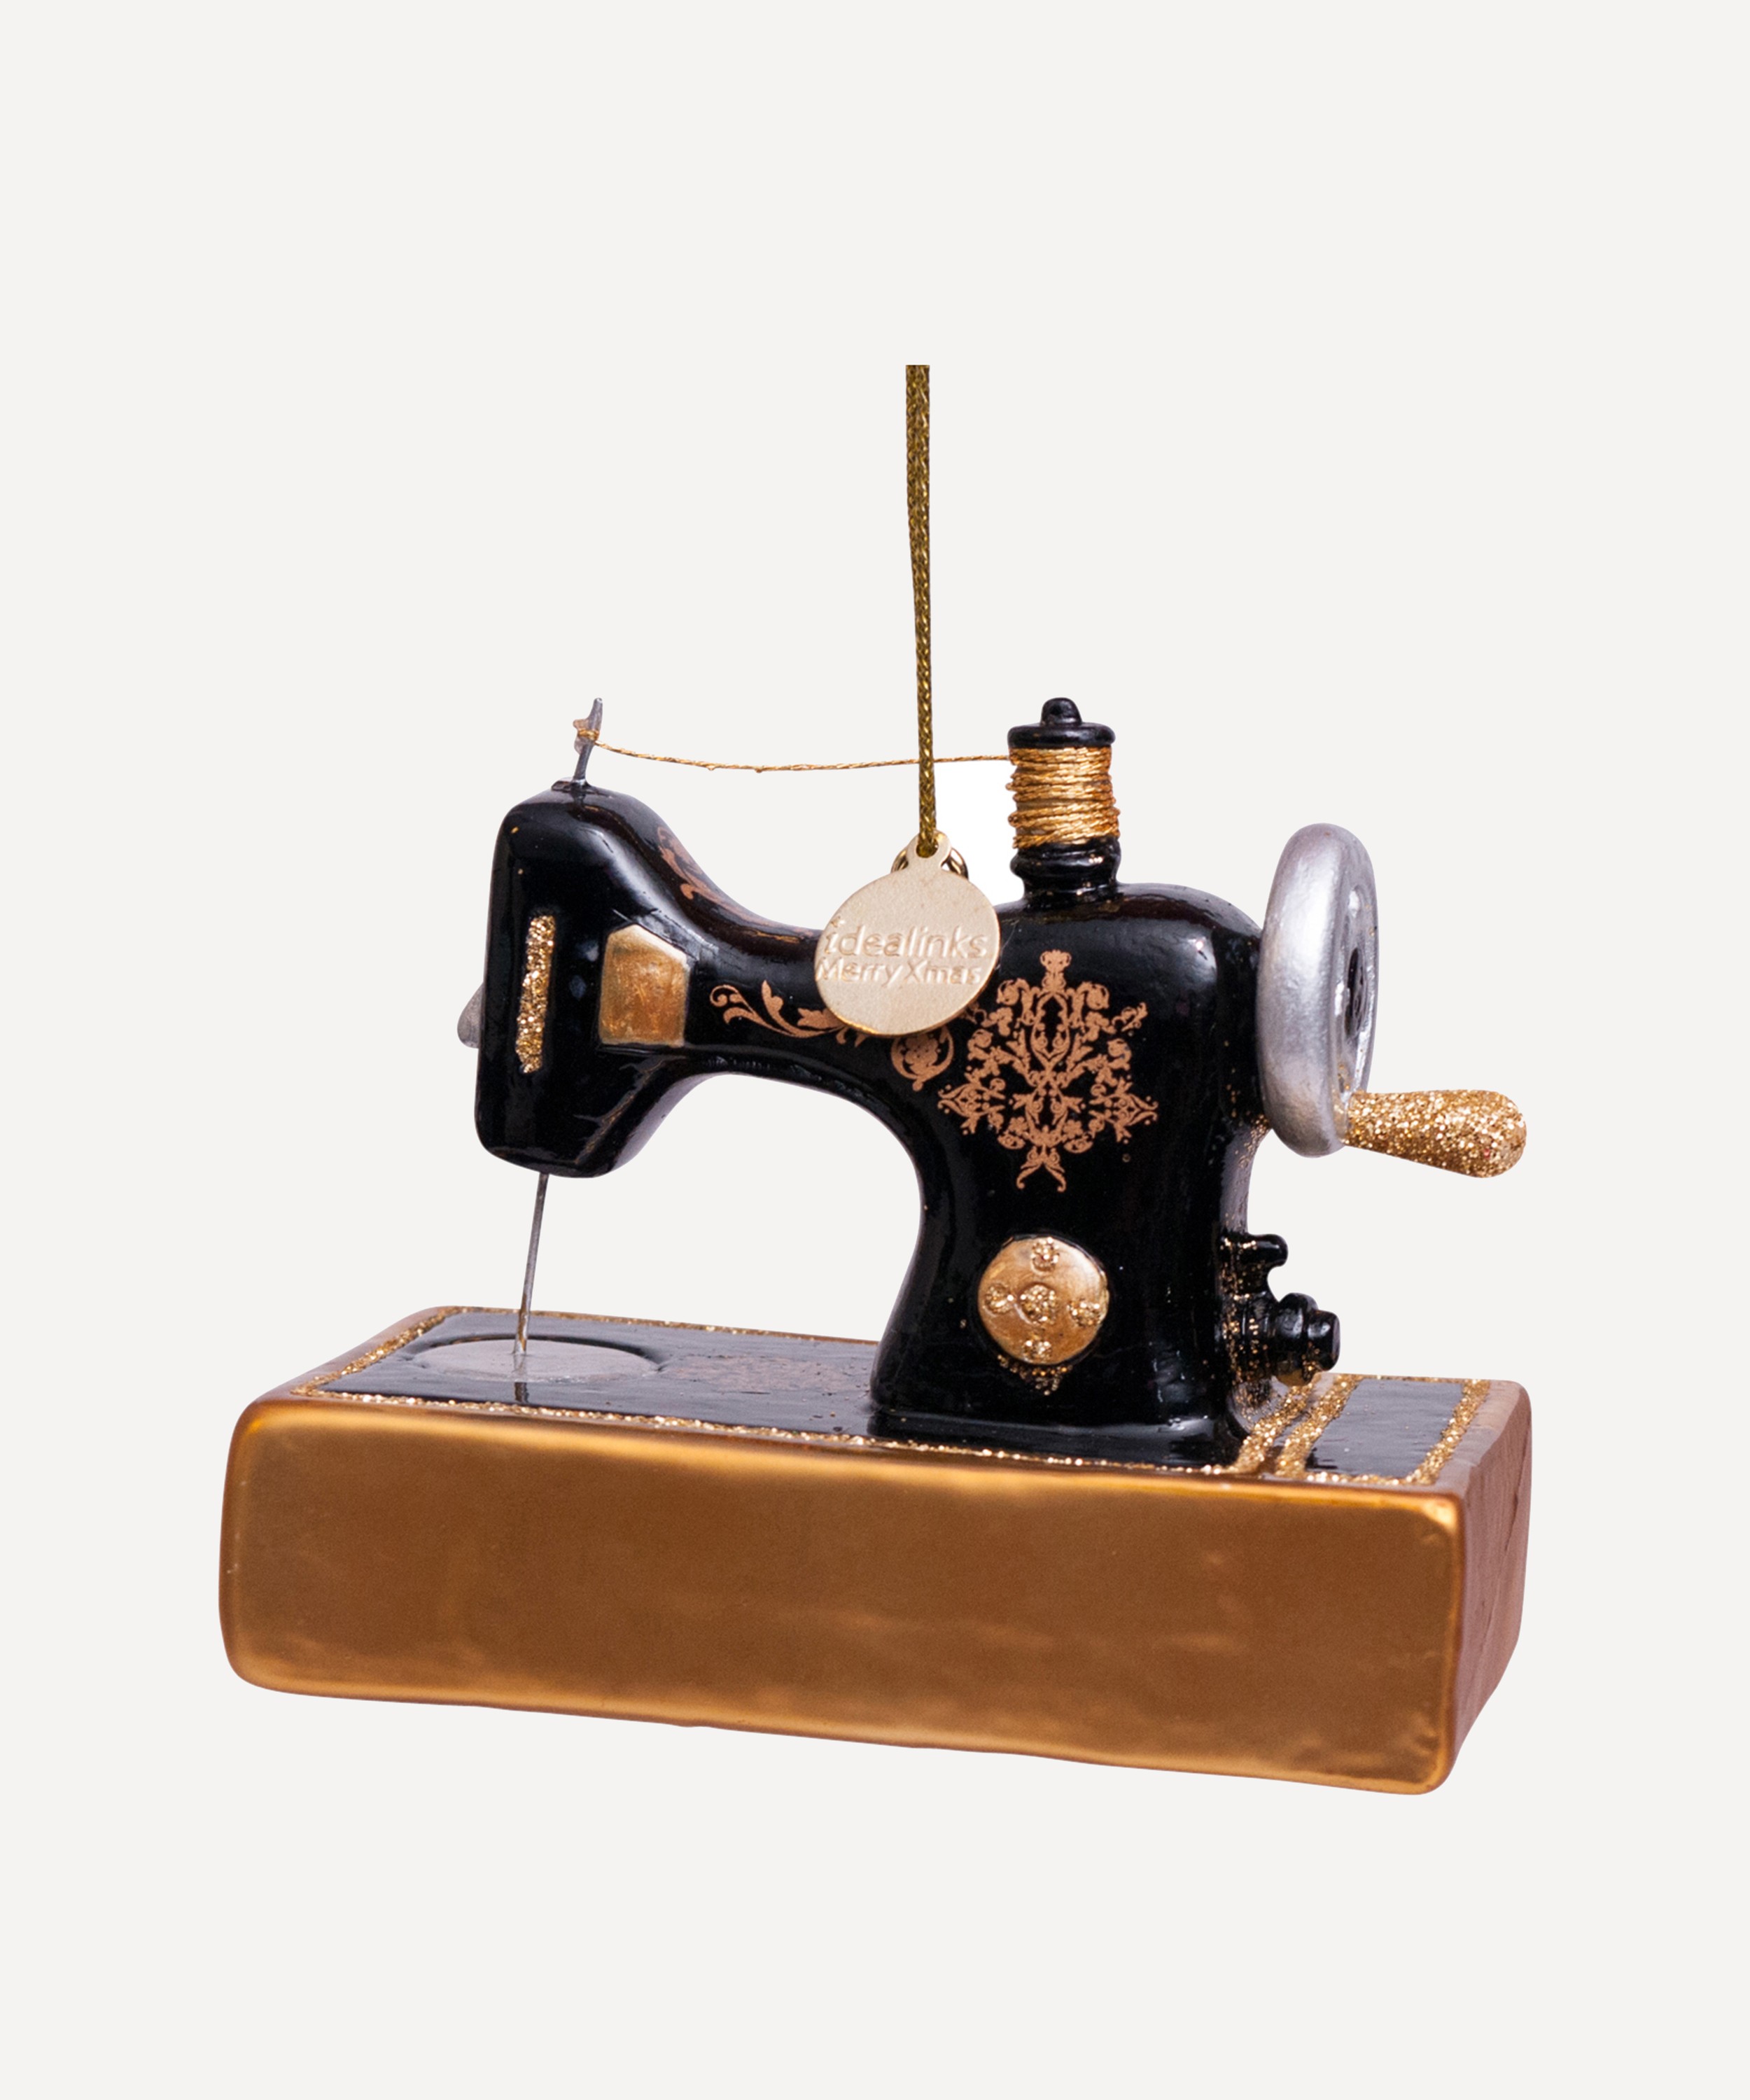 Accessoire - AJU  Vintage sewing kit, Vintage sewing, Antique sewing kit